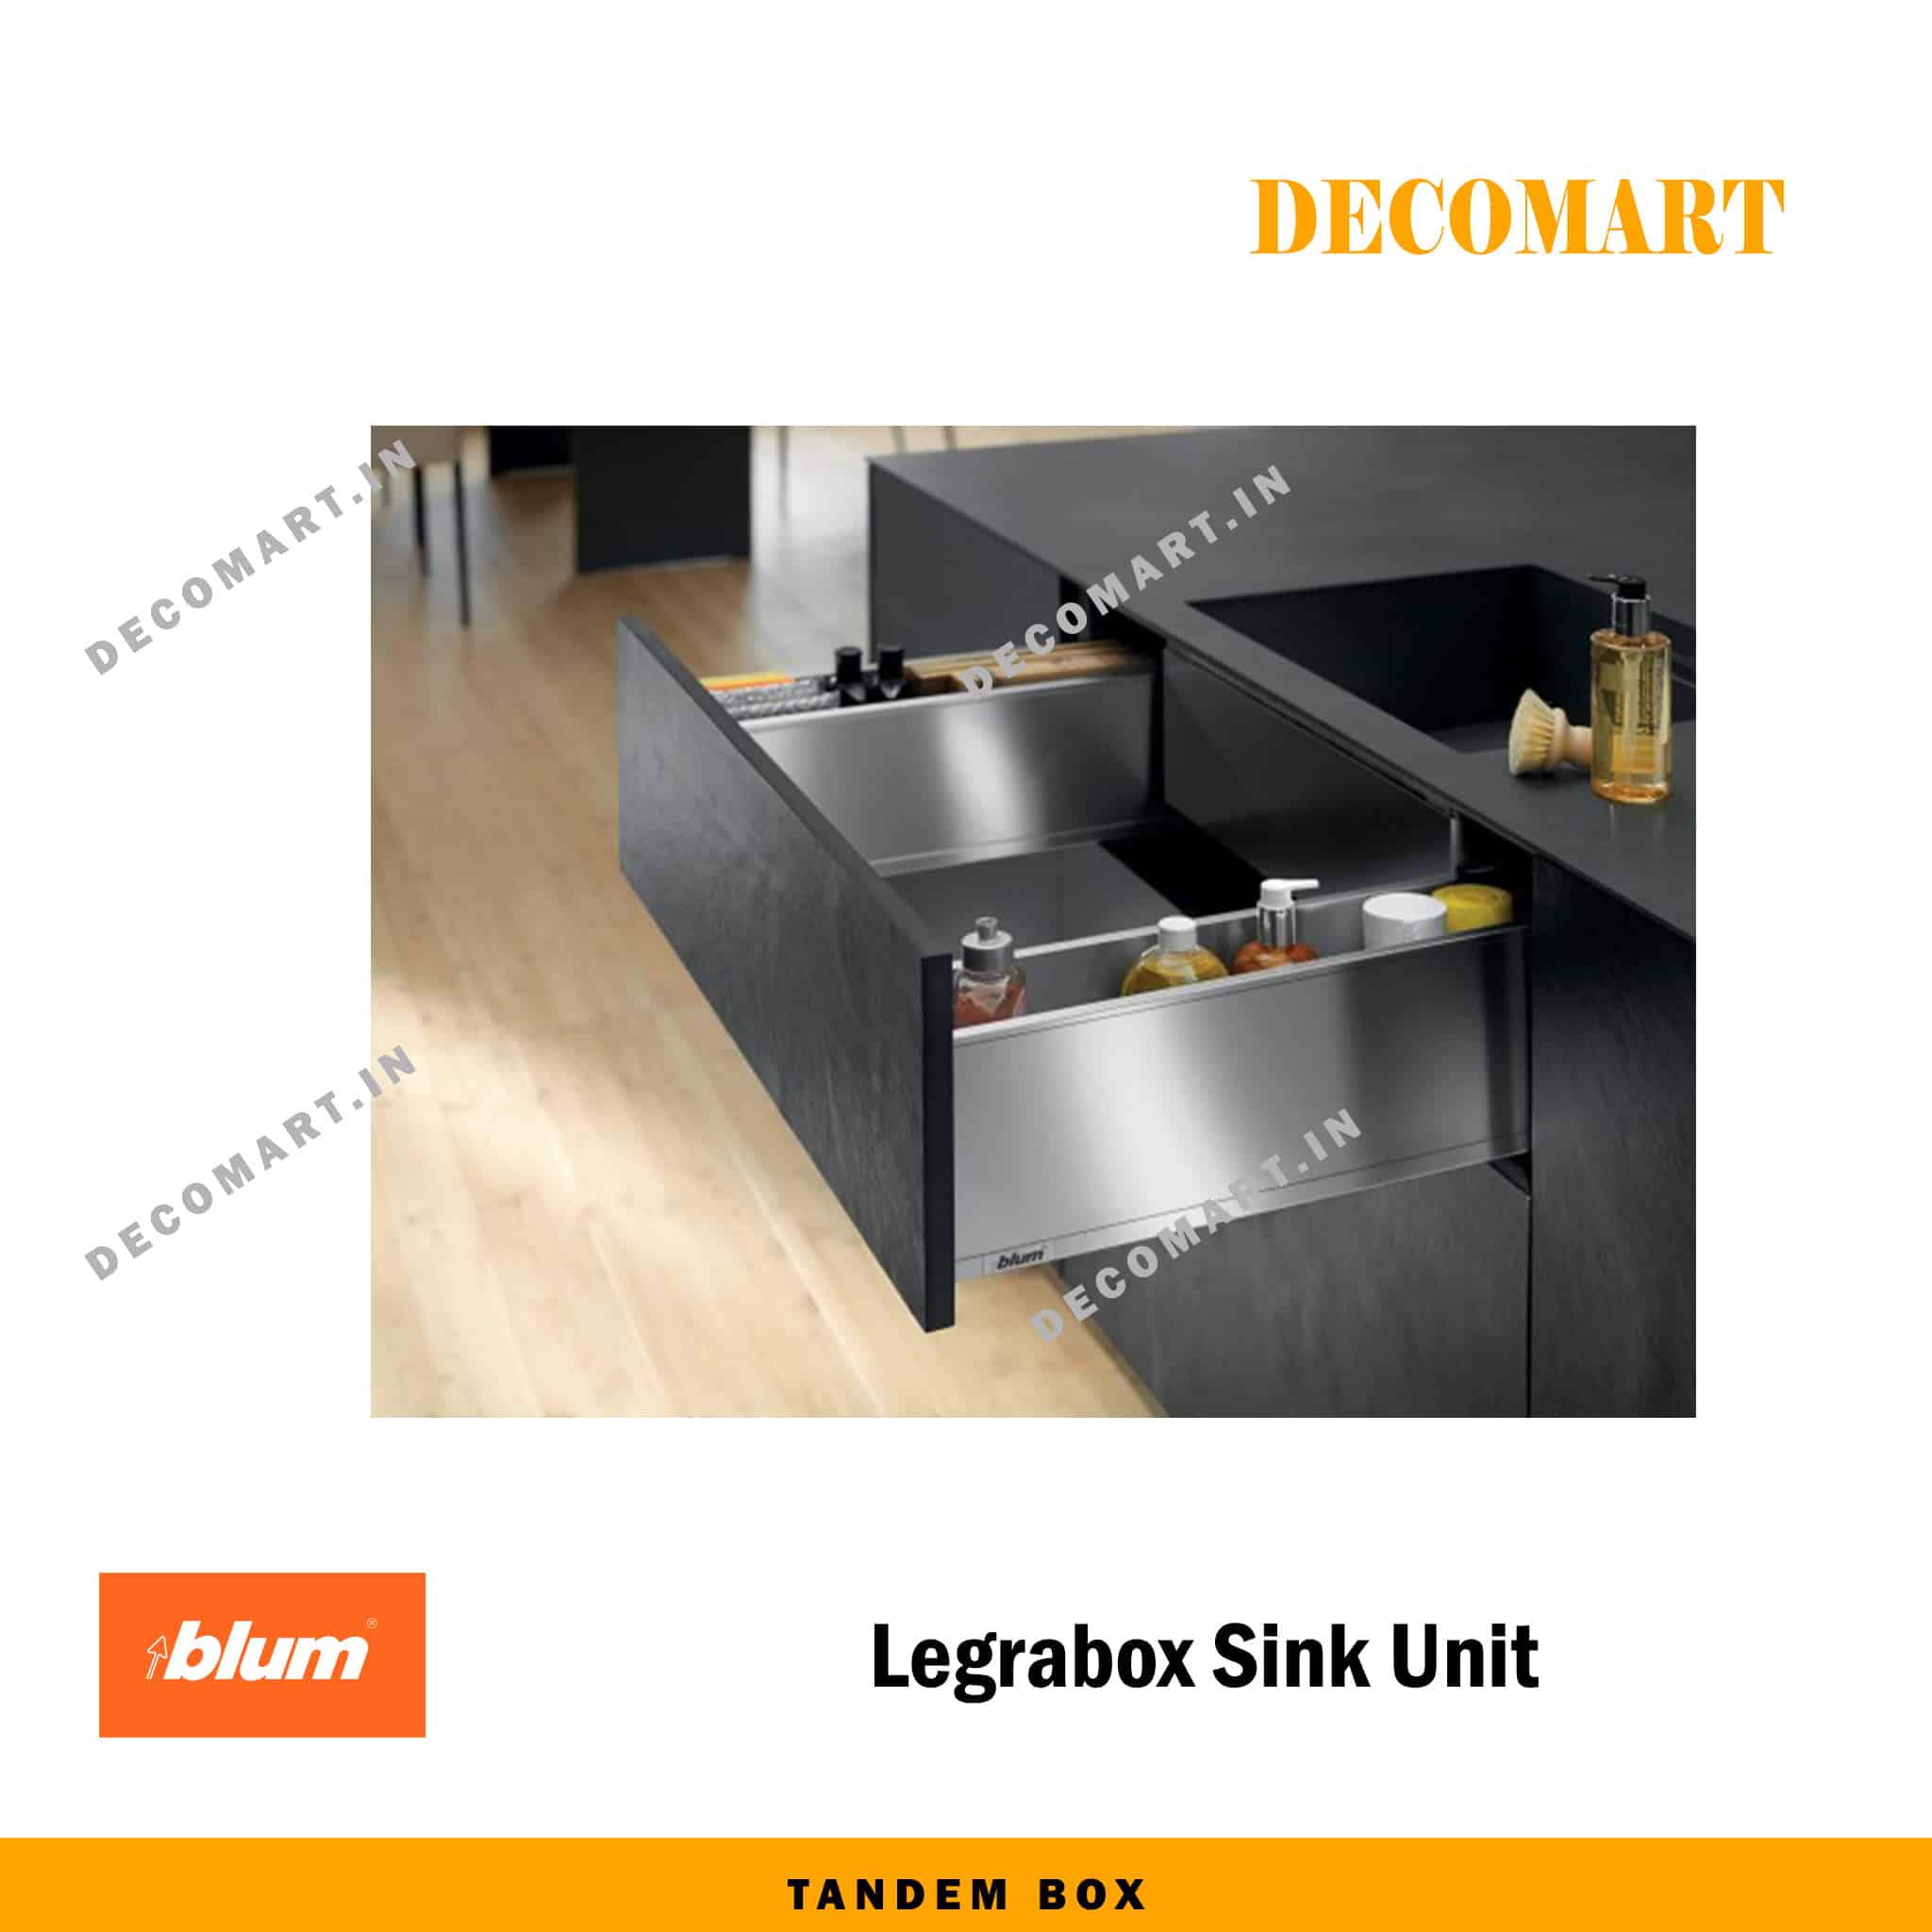 Blum Legrabox Sink Unit